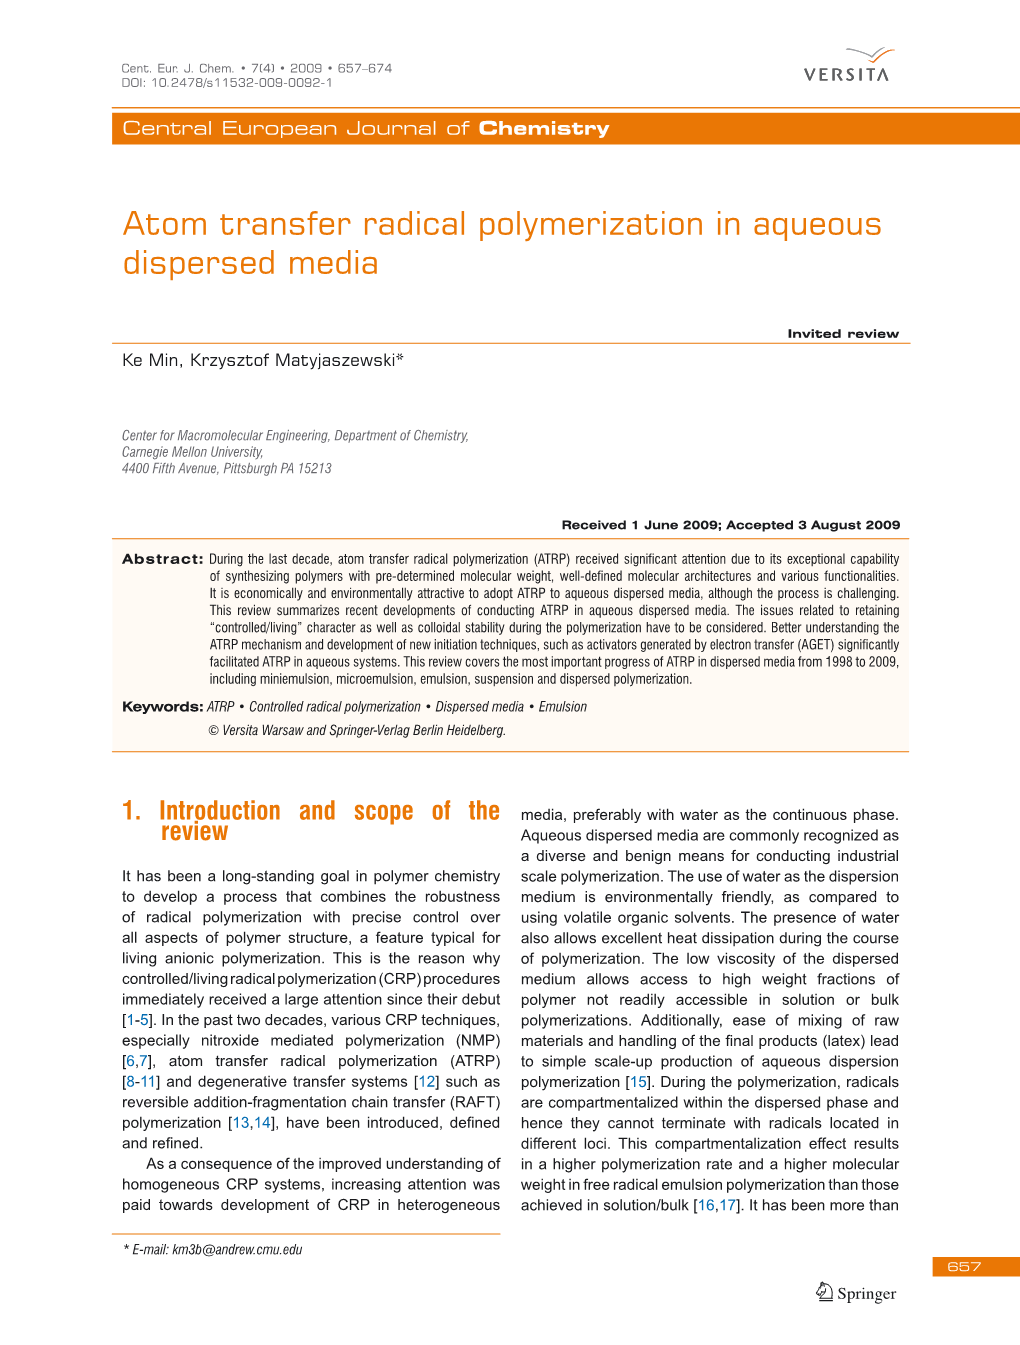 Atom Transfer Radical Polymerization in Aqueous Dispersed Media